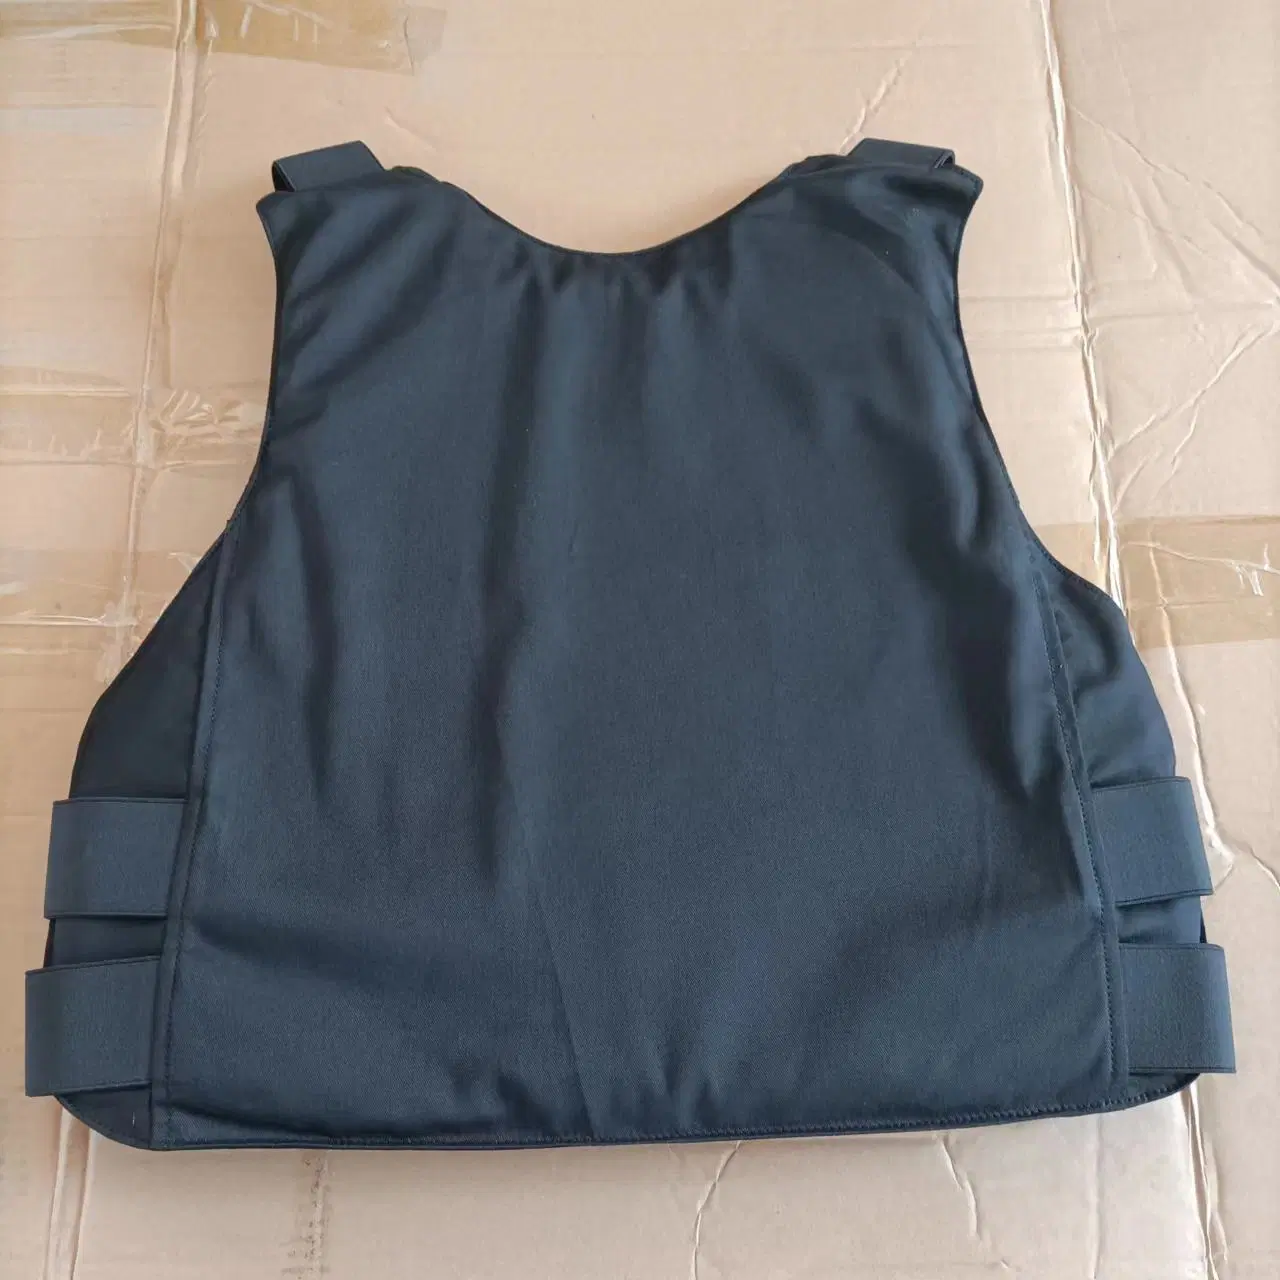 Police Military Body Armor Ballistic Concealed Underwear Bullet Proof Bulletproof Vest